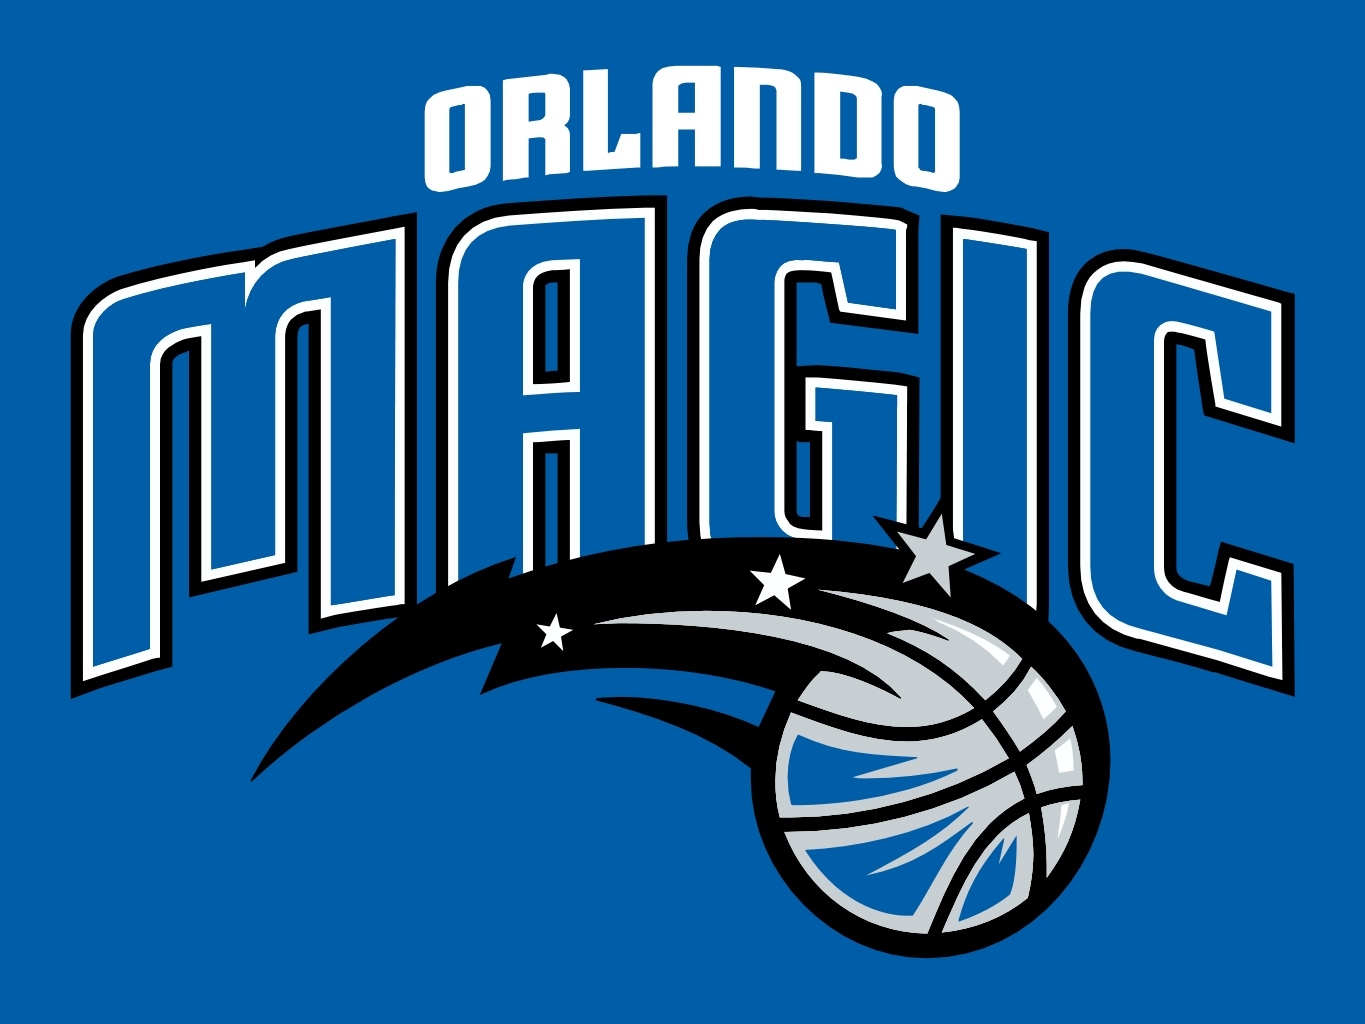 Brooklyn Nets vs Orlando Magic Live Streams